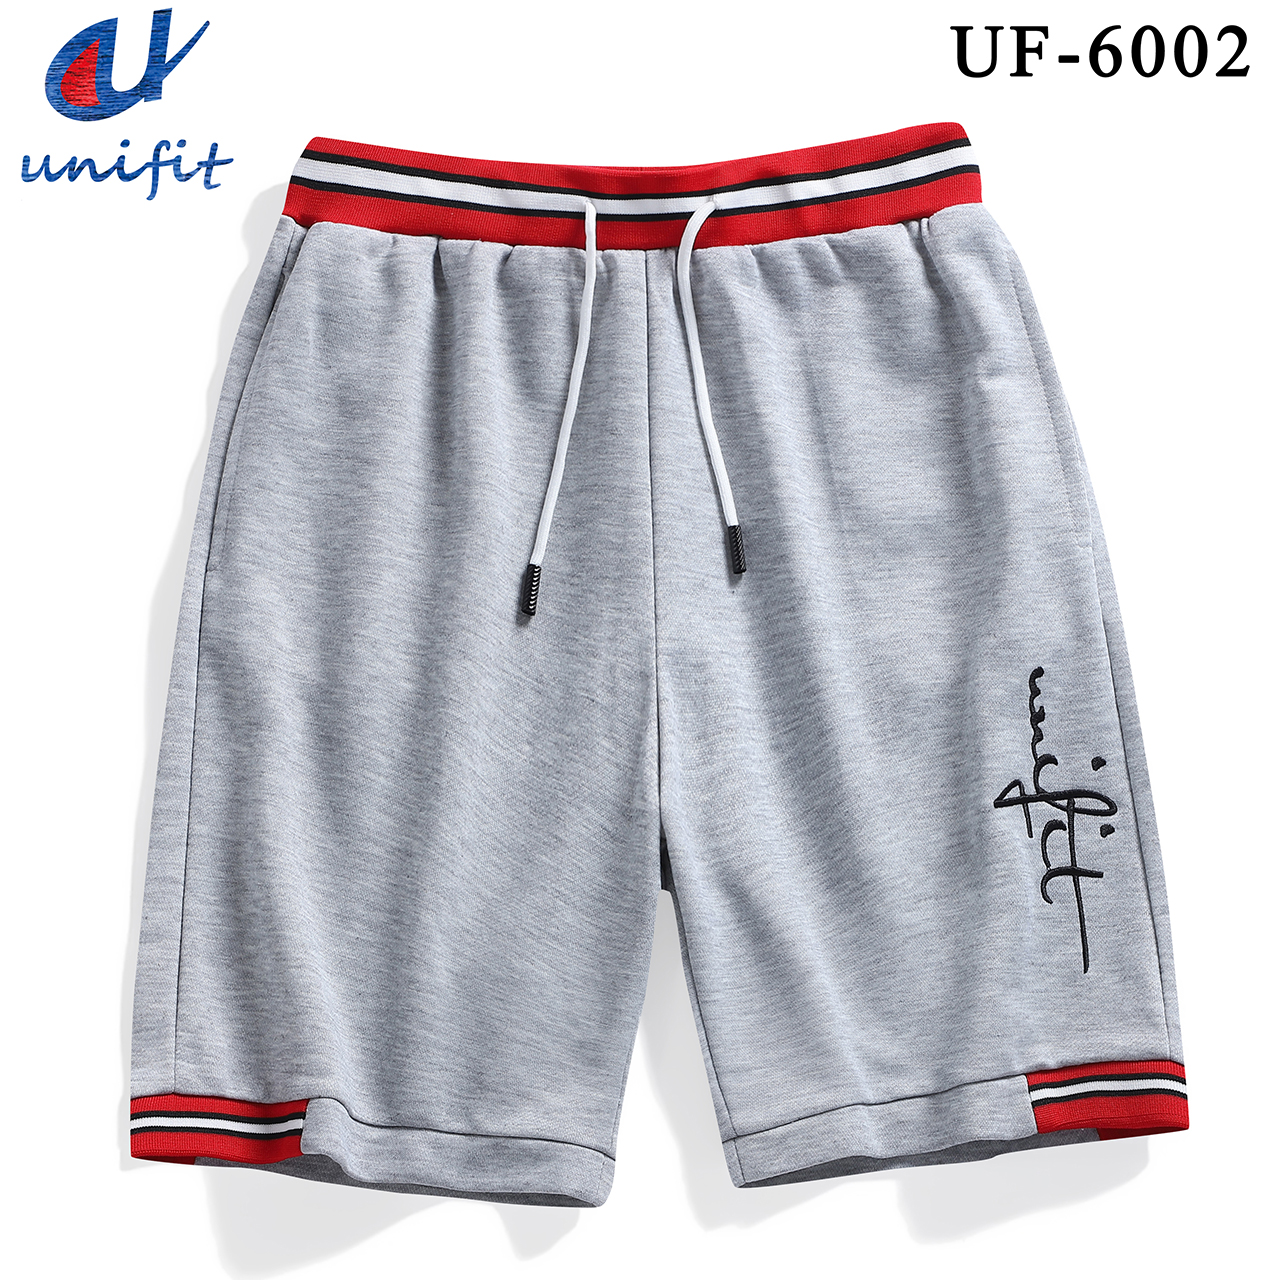 UNIFIT Men's Shorts Cotton Casual Walker Sweat Shorts UF-6002 | Lazada PH